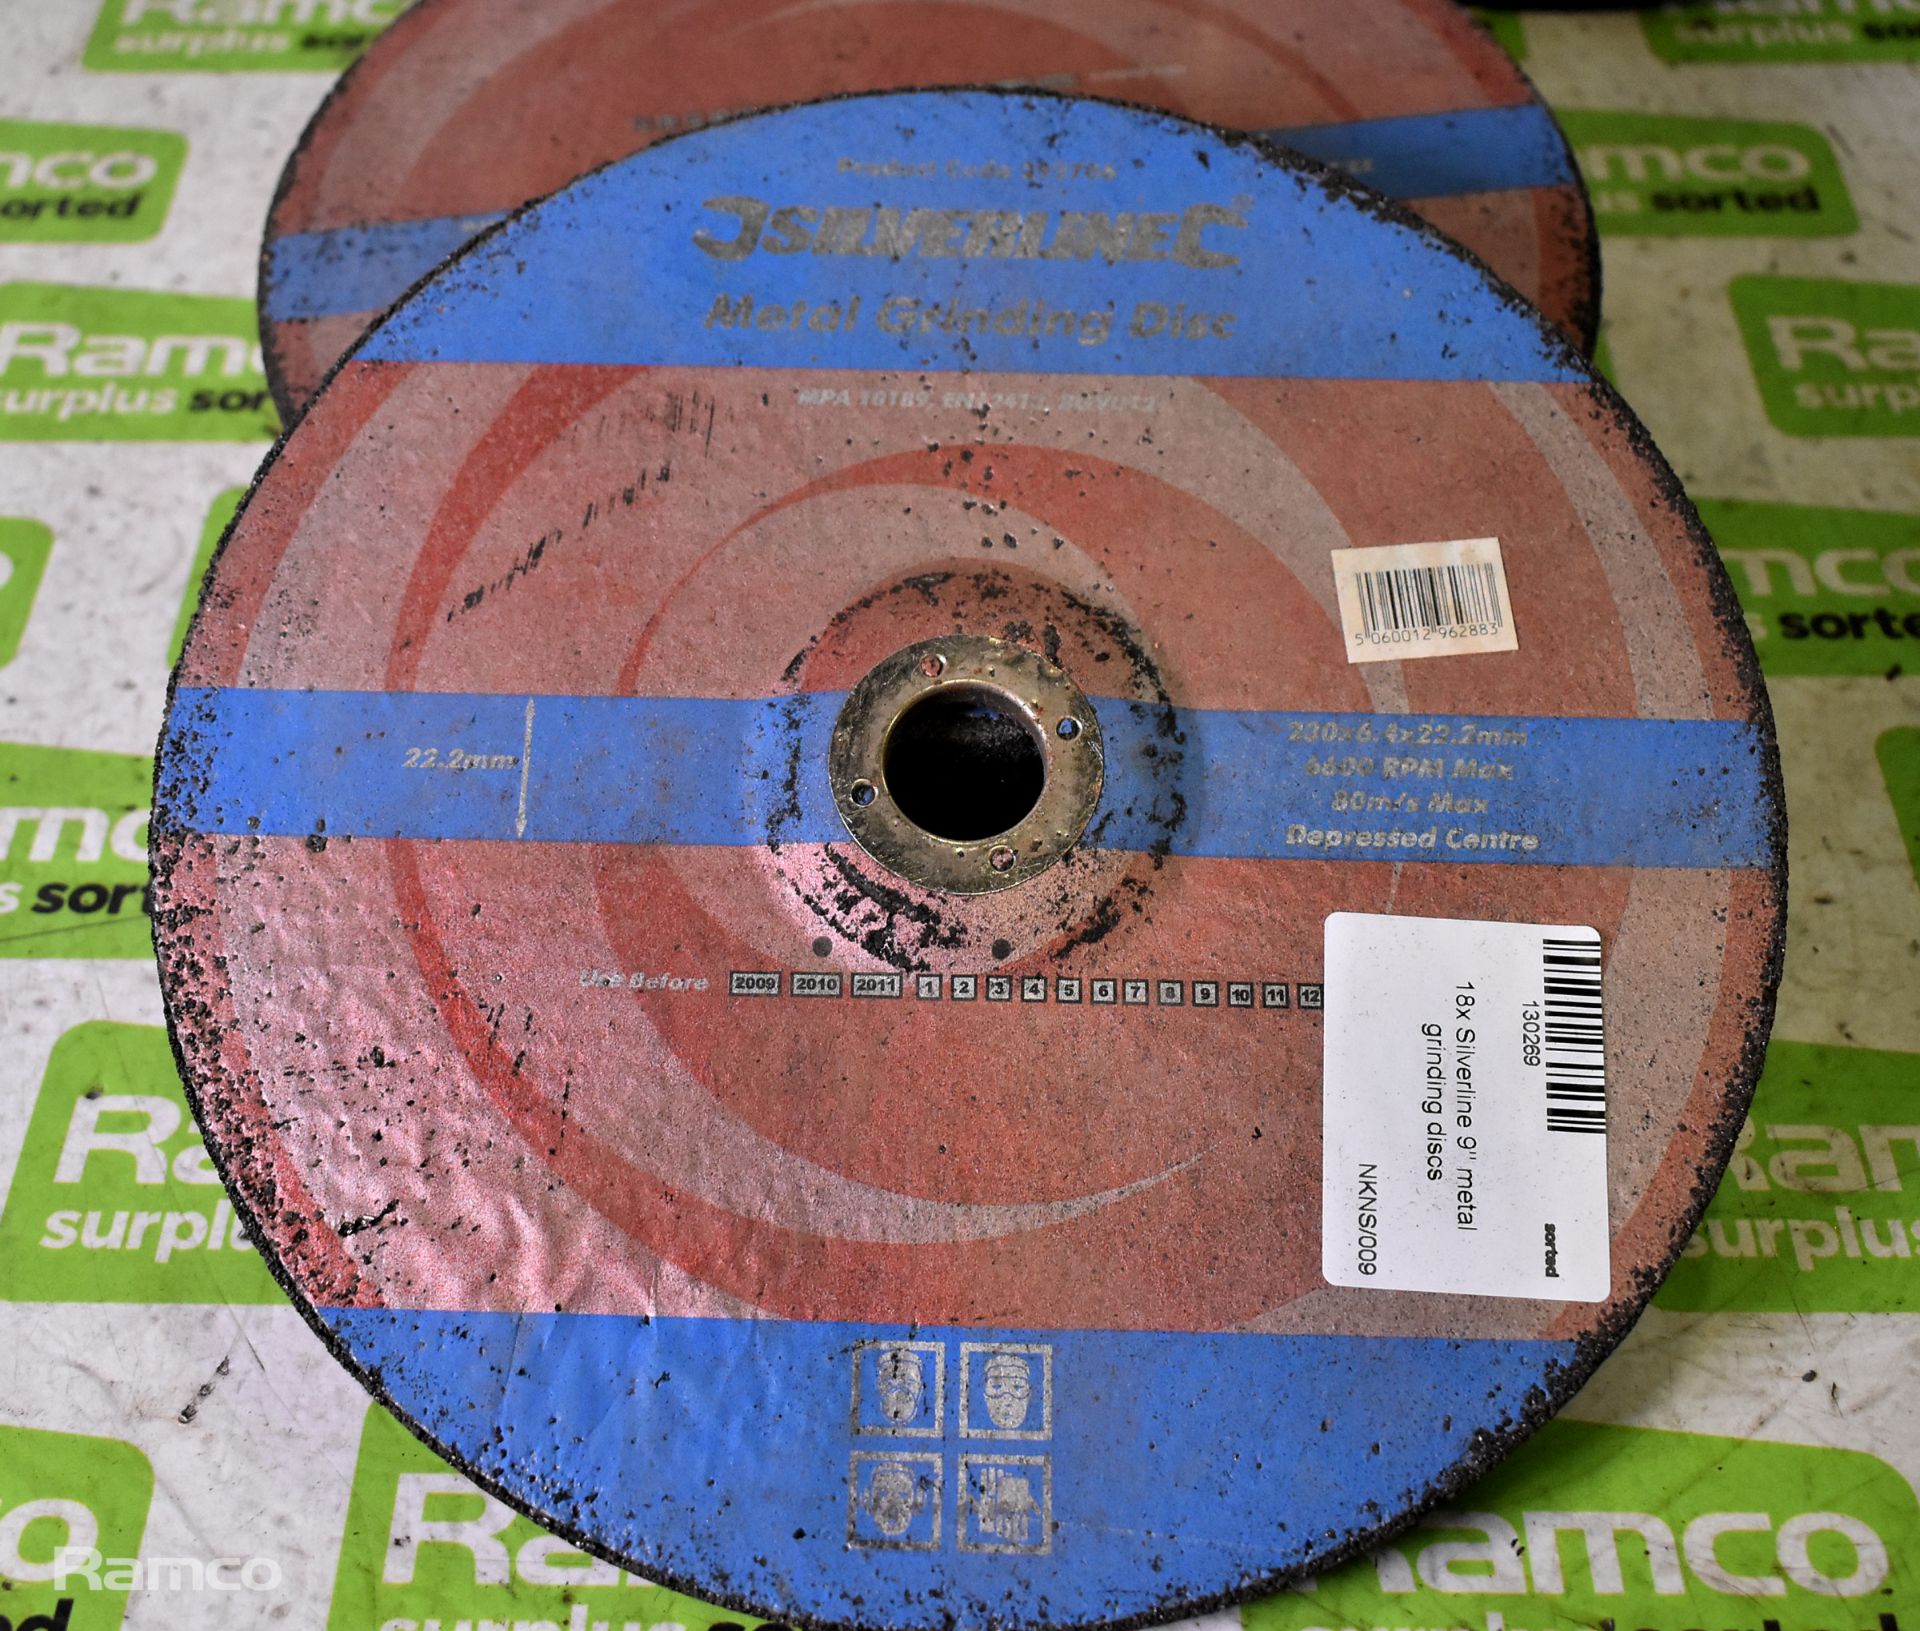 18x Silverline 9" metal grinding discs - Image 2 of 3